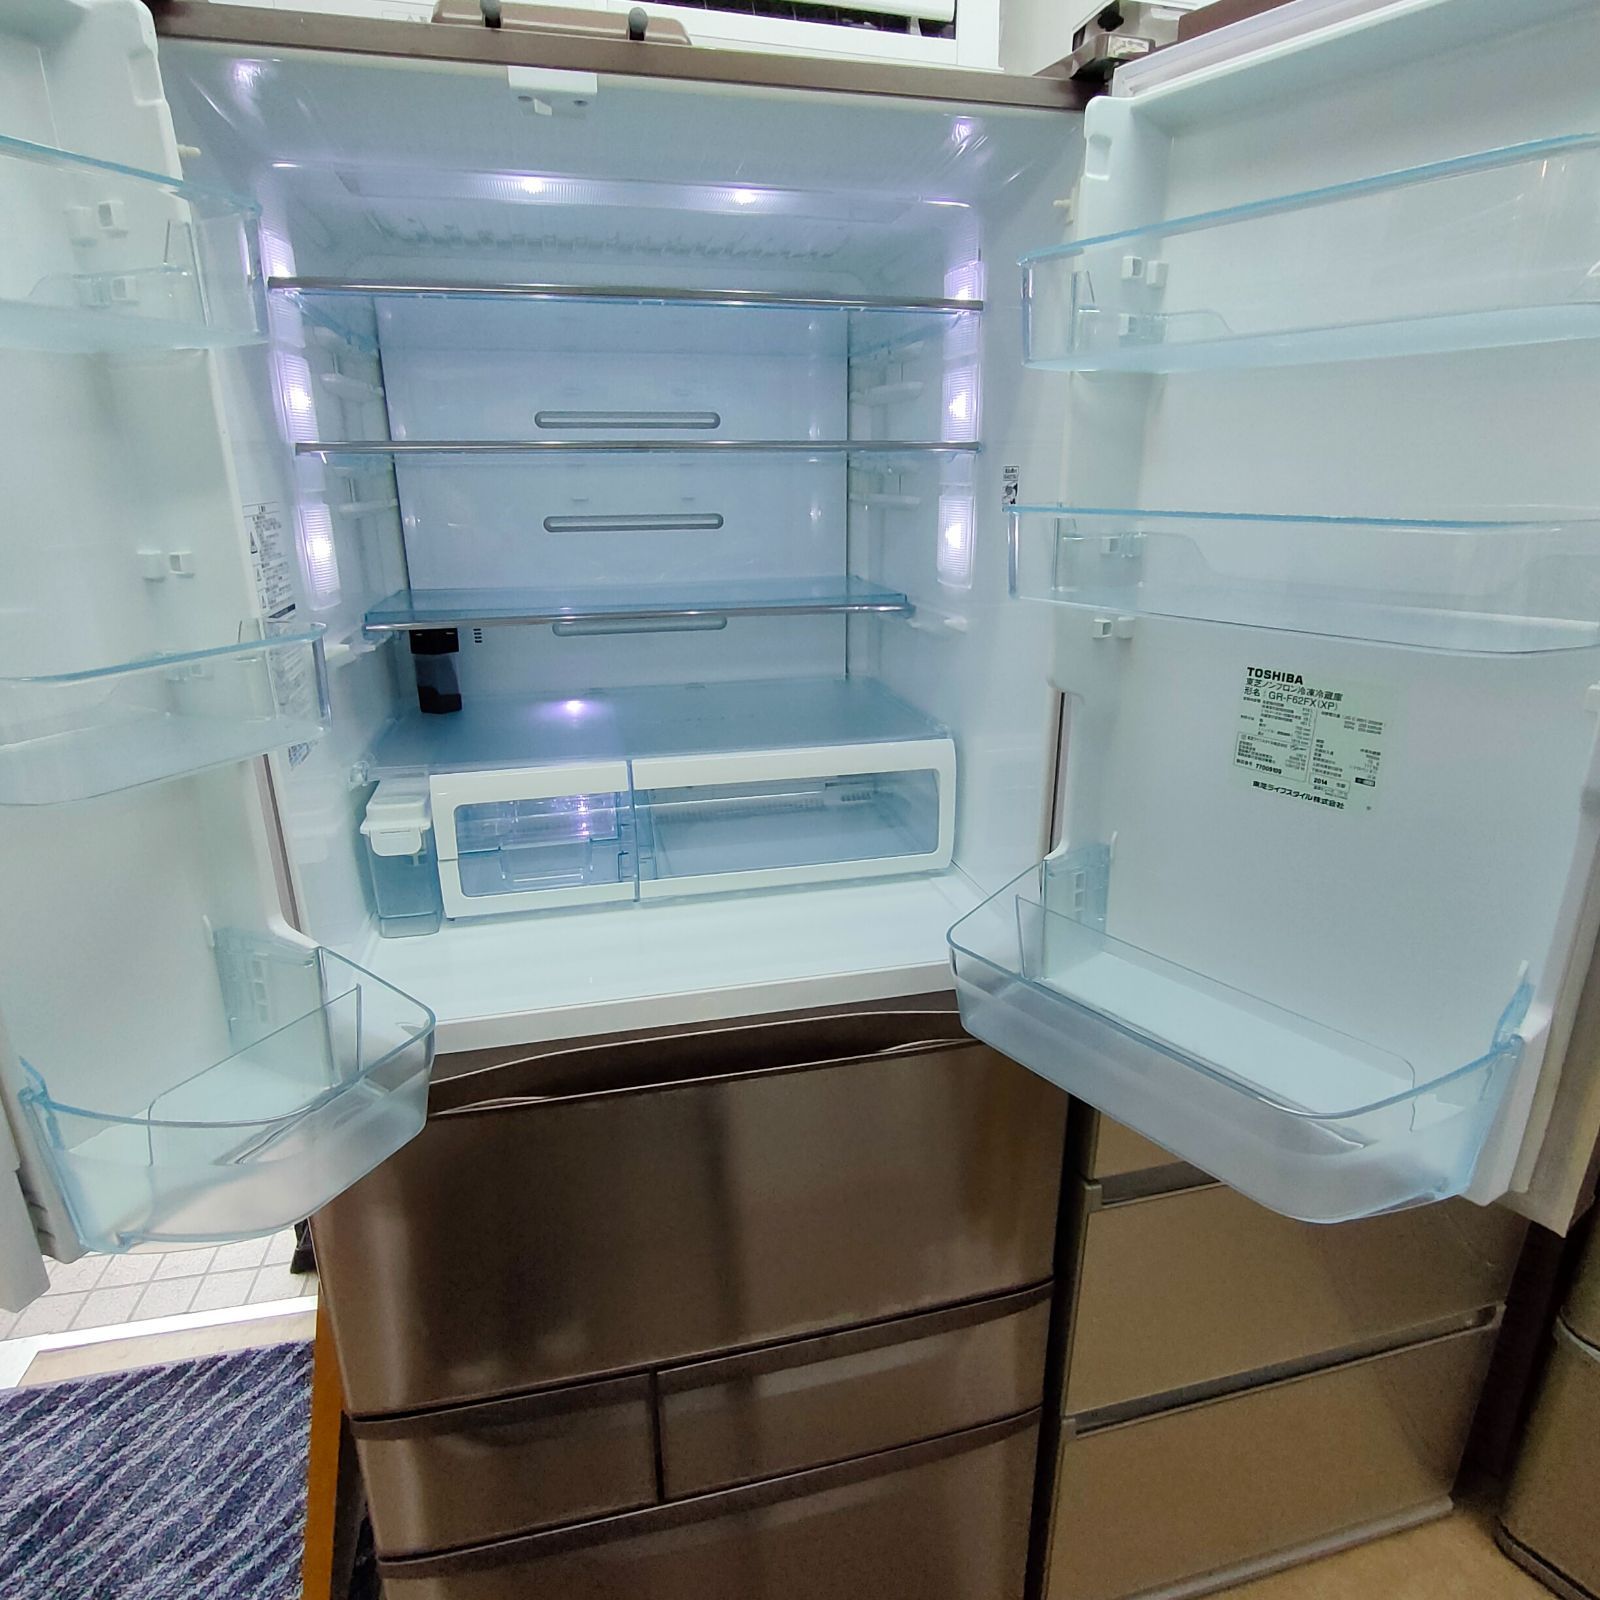 TOSHIBA 2014年製 冷蔵庫 618ℓ - キッチン家電